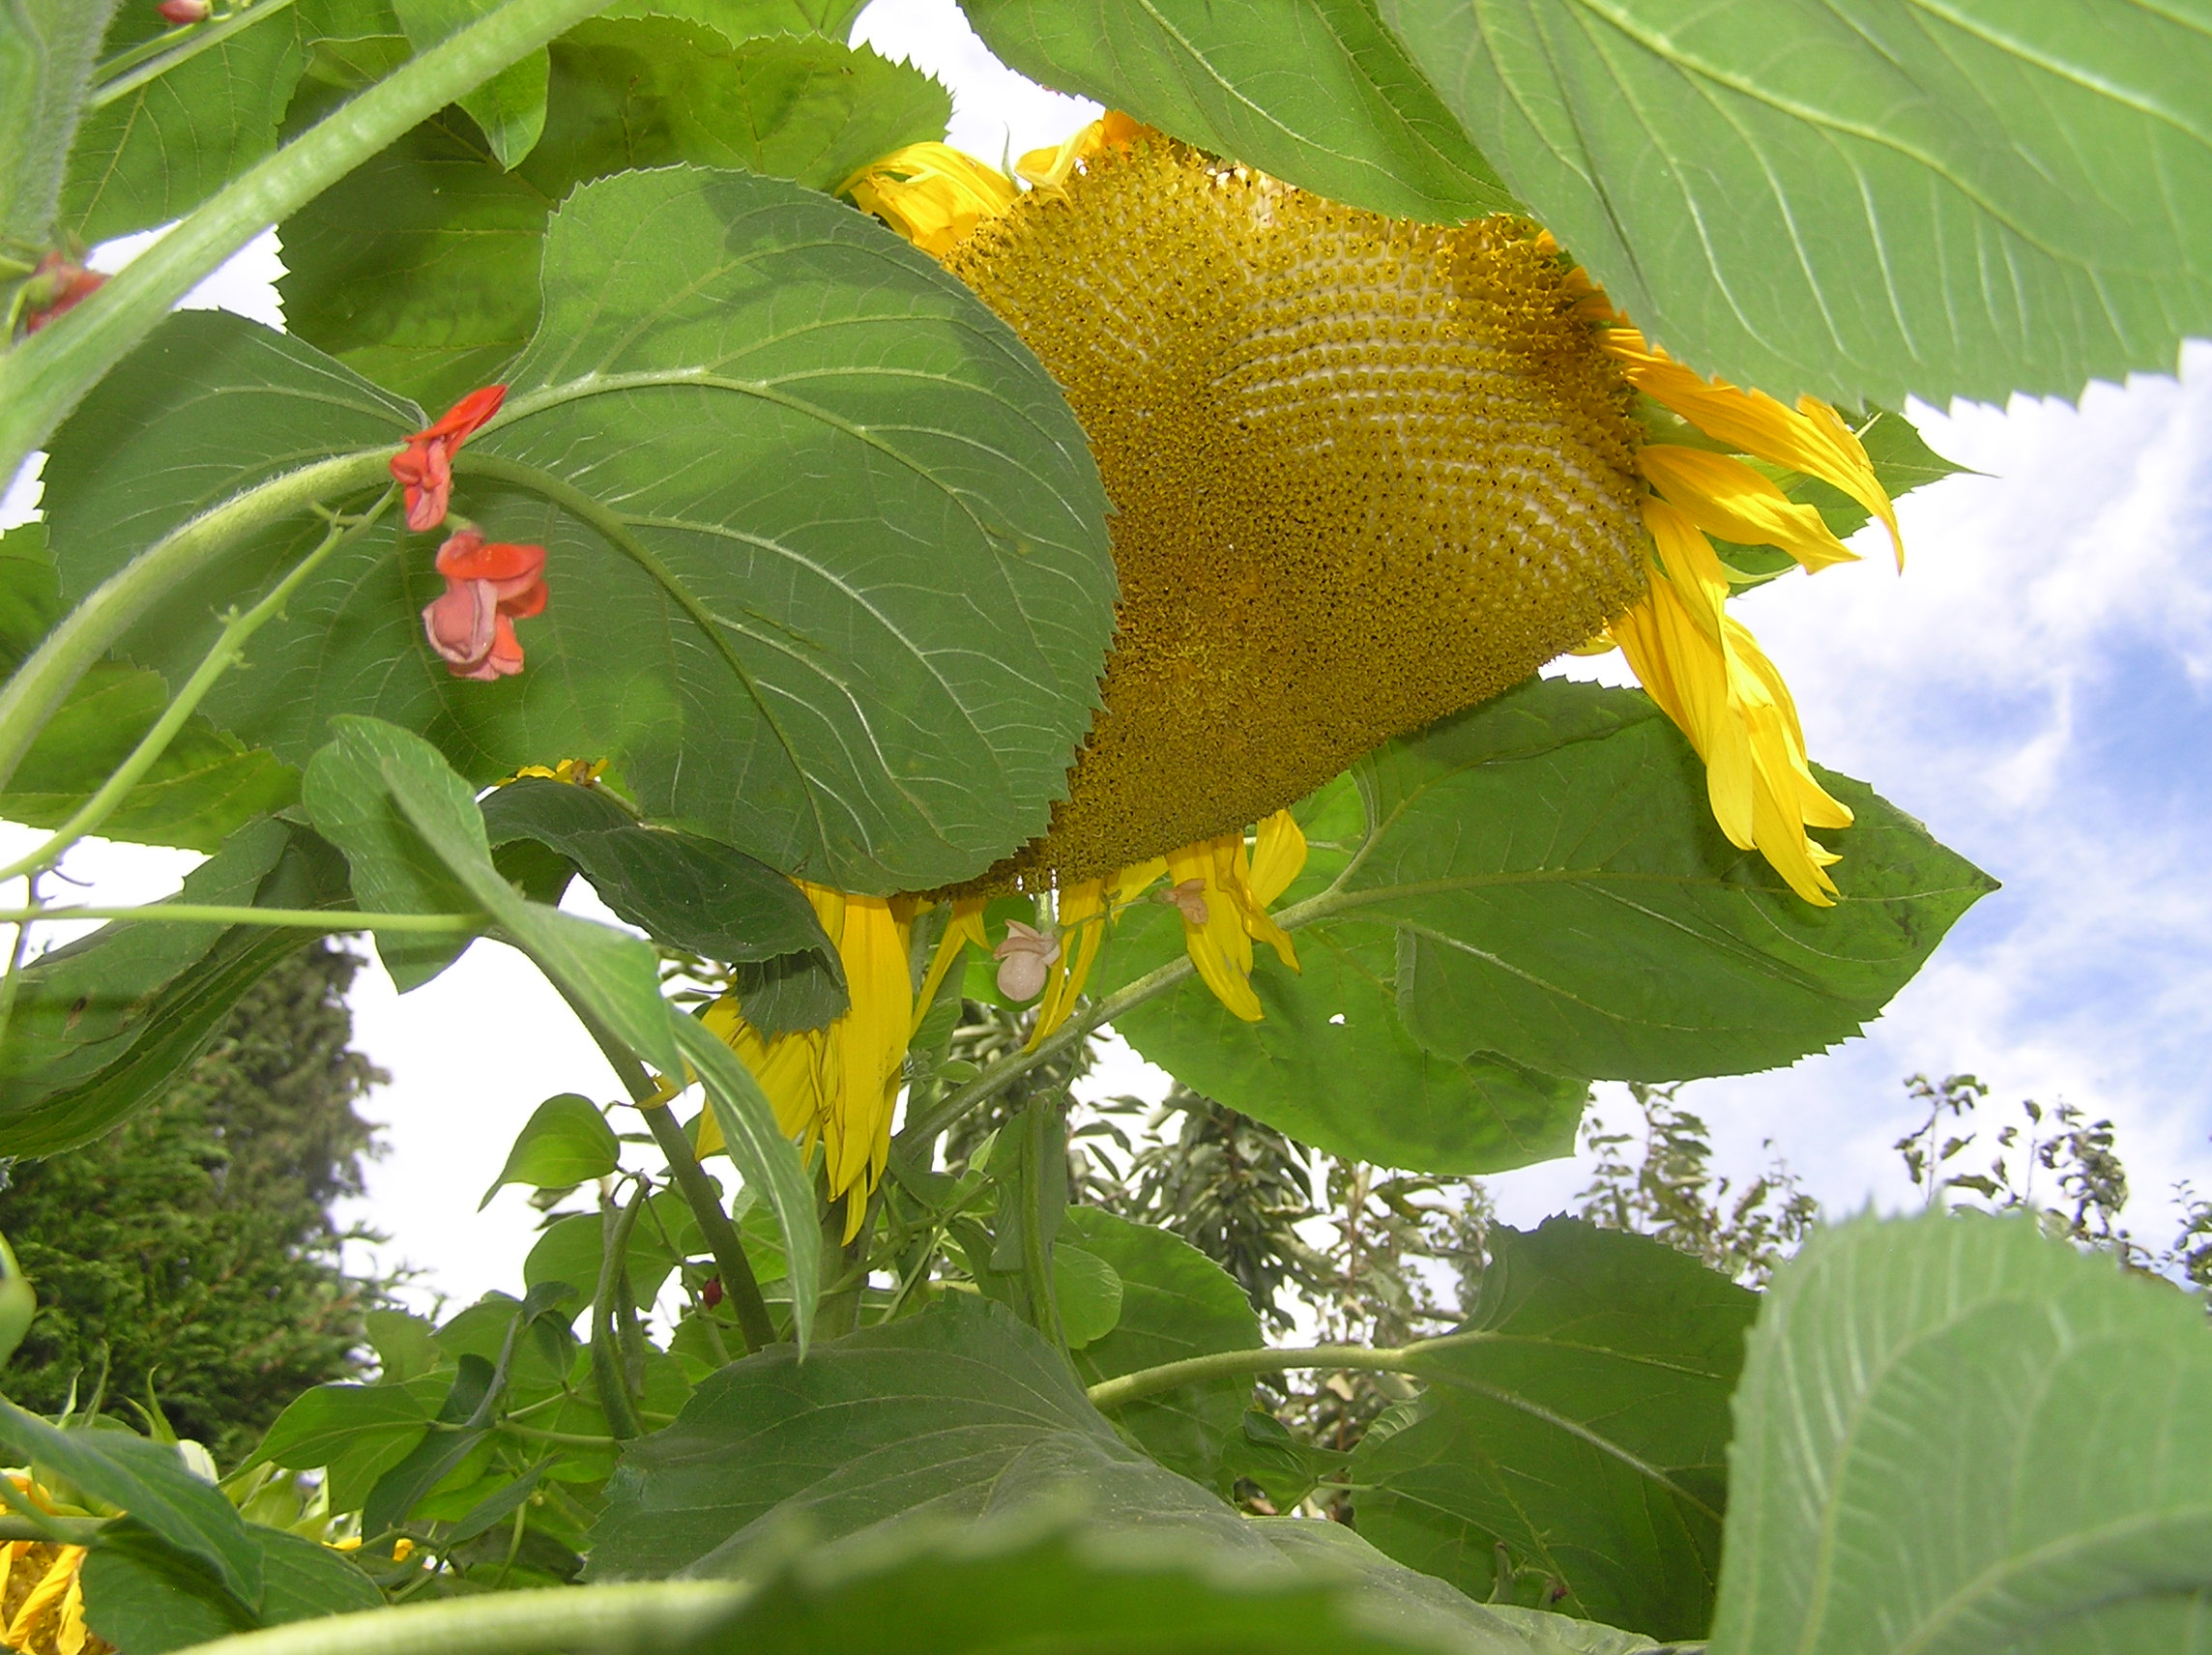 Beans climbing on sunflowers